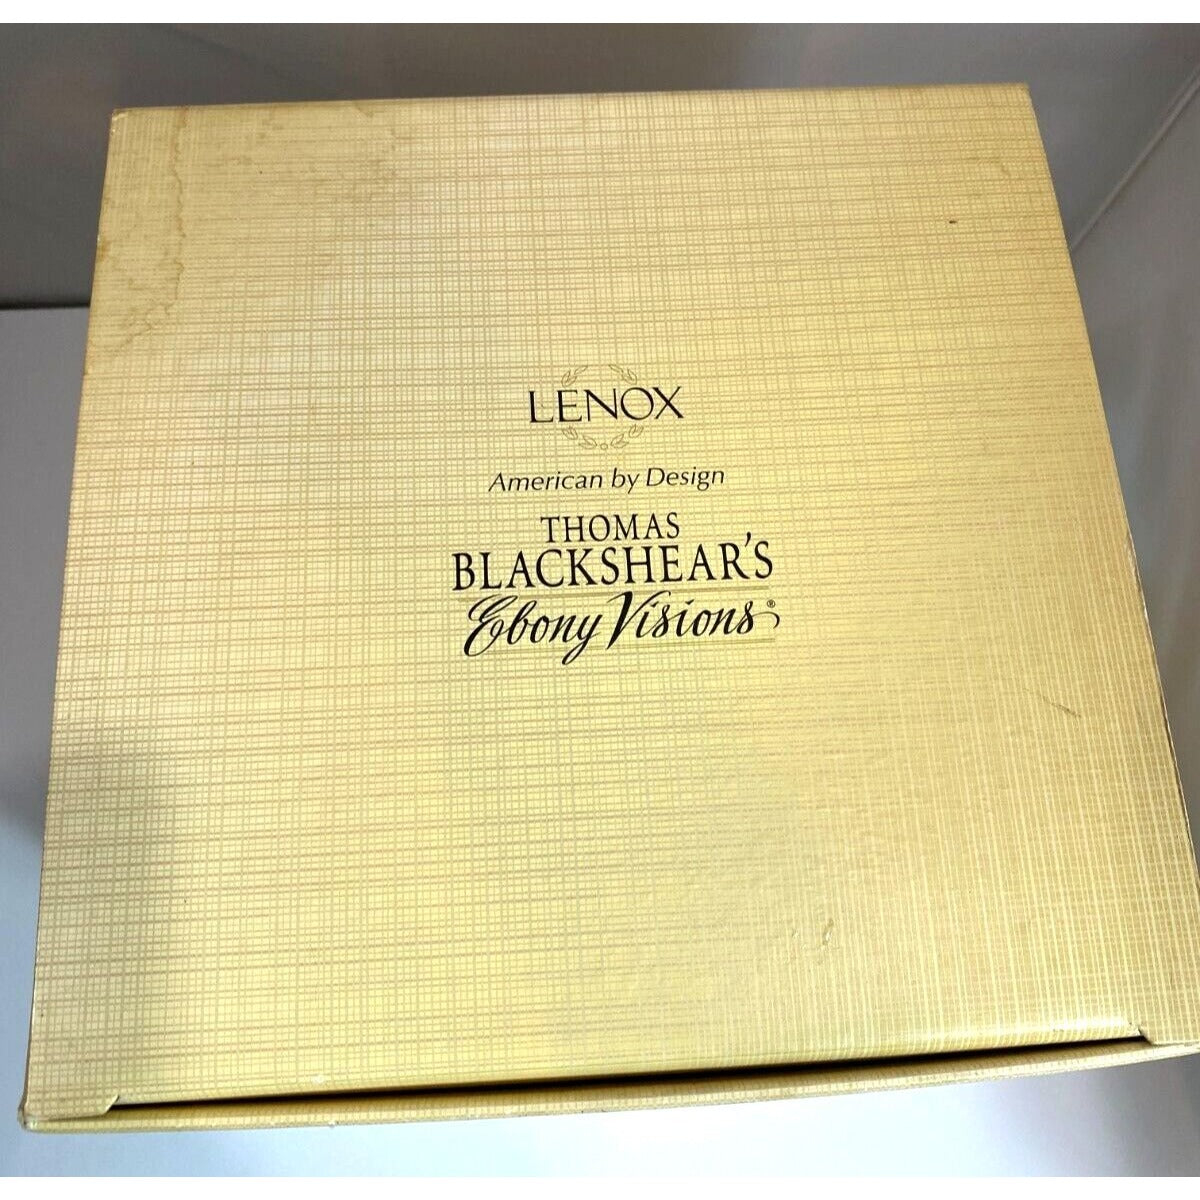 Thomas Blackshear Ebony Visions The Wise Man With Gold LE #100 - Signed